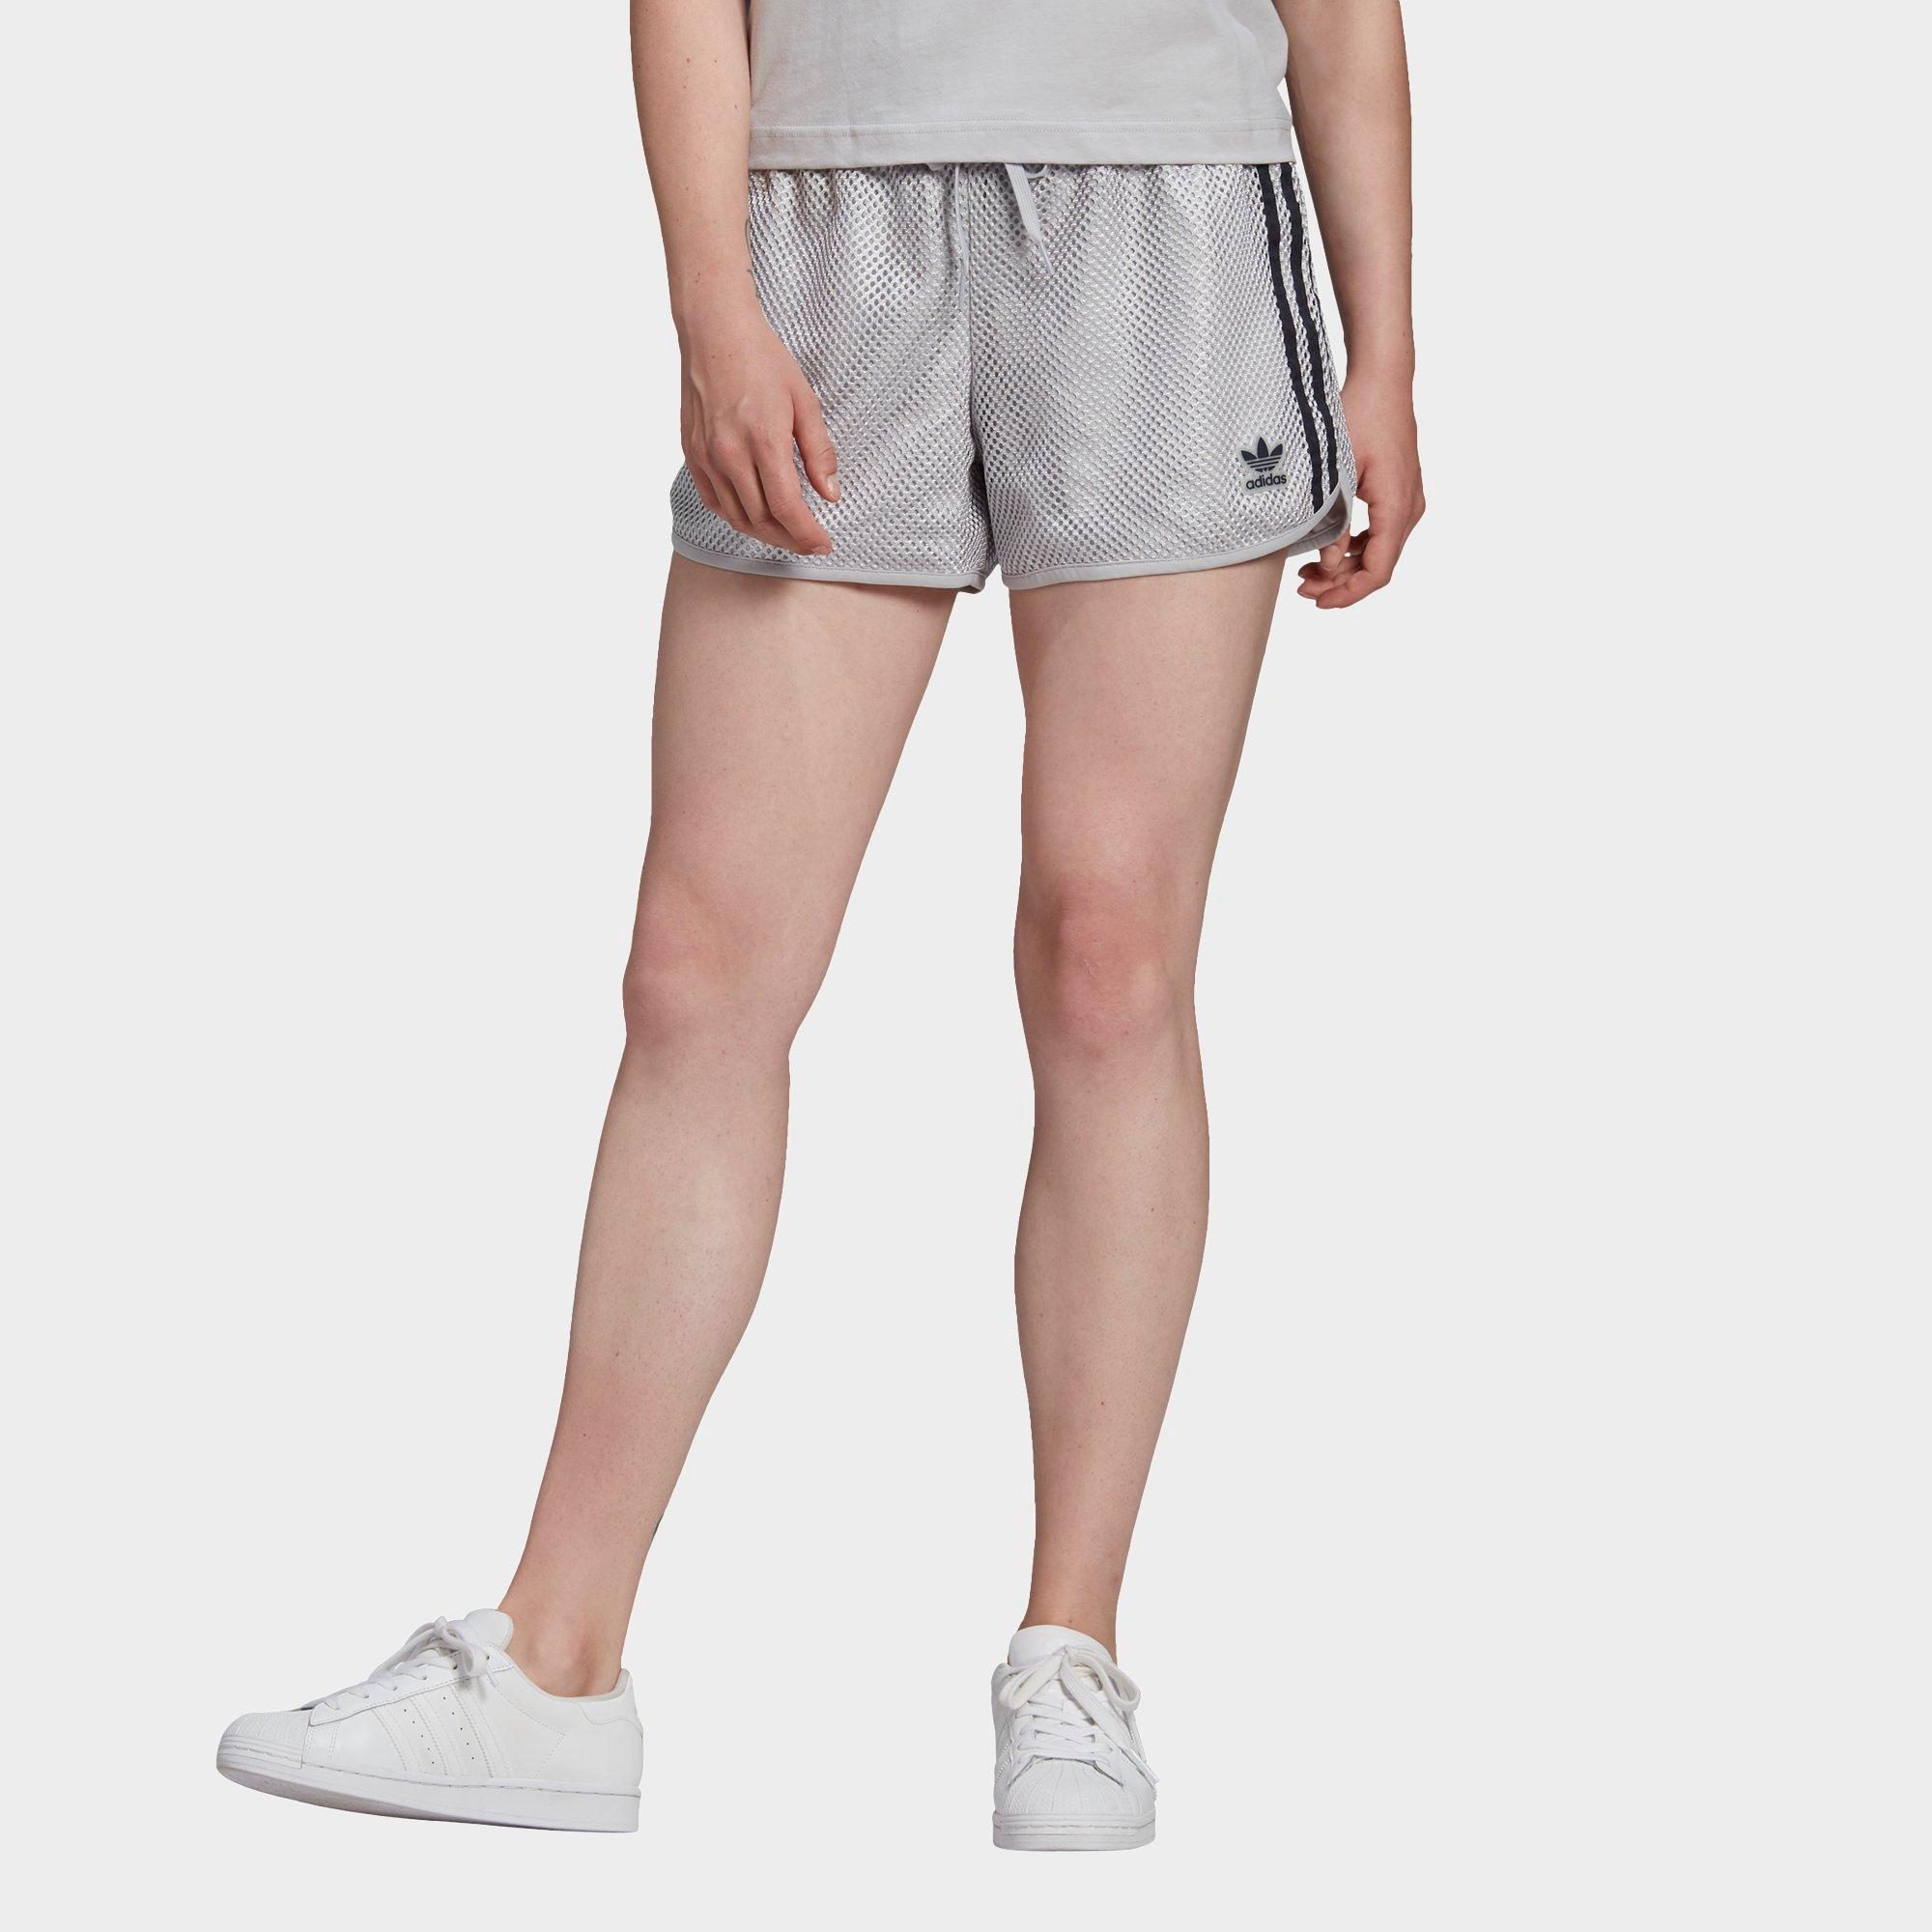 adidas mesh shorts women's